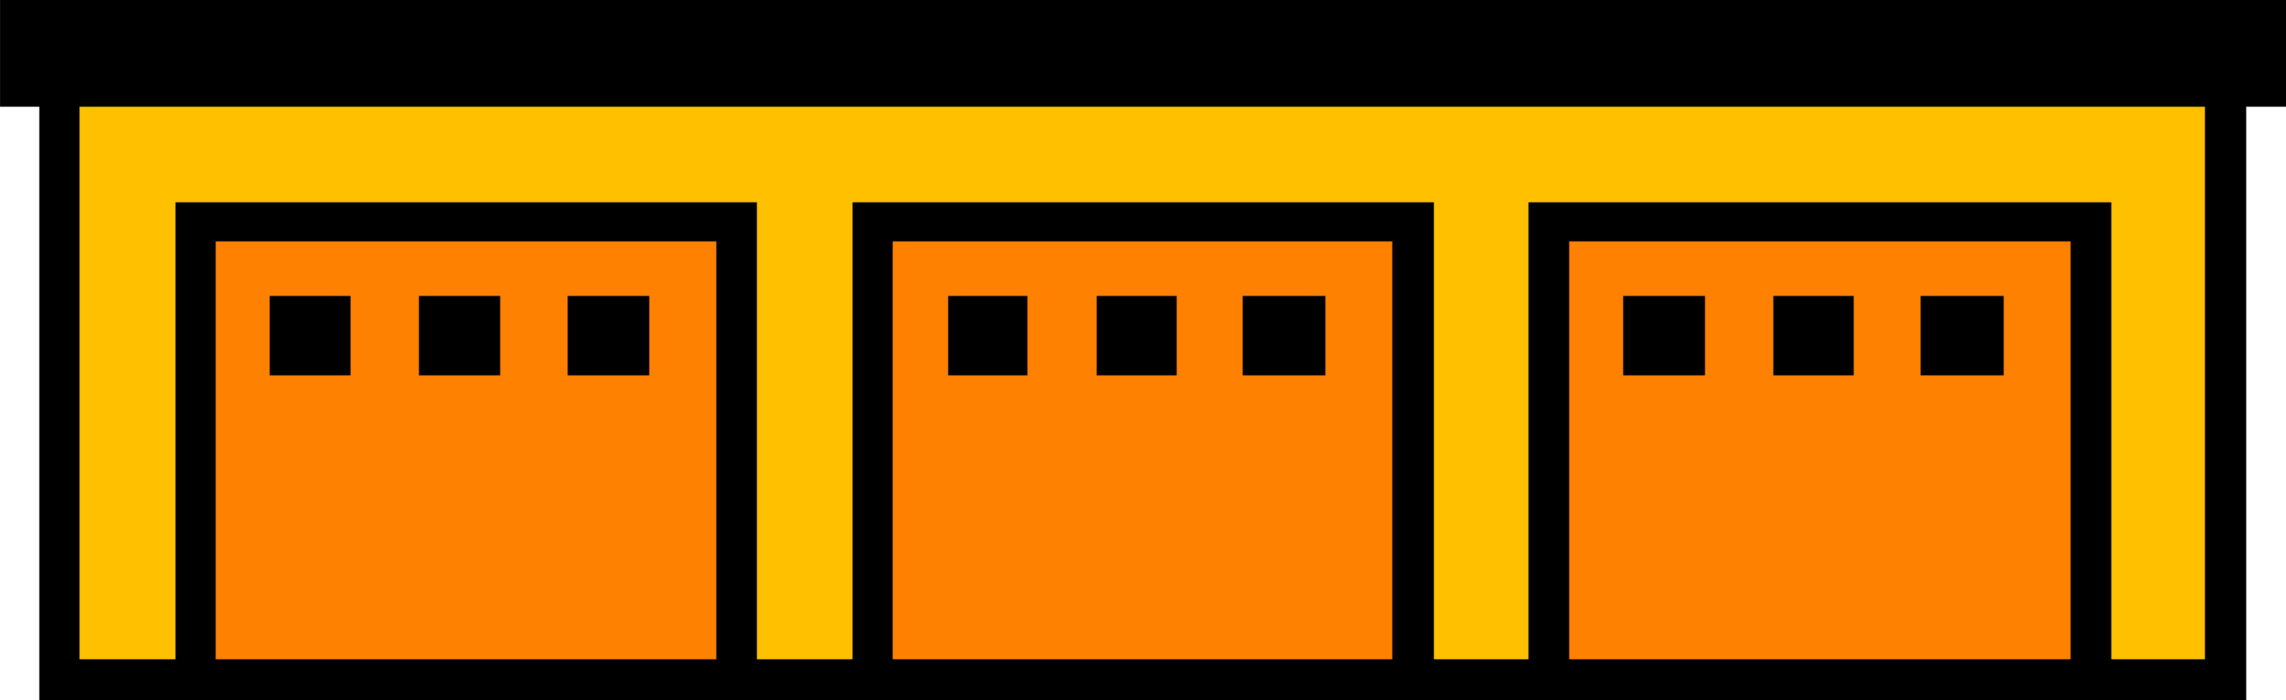 Vector Illustration of Garage or Storage Padlock Locker Symbol